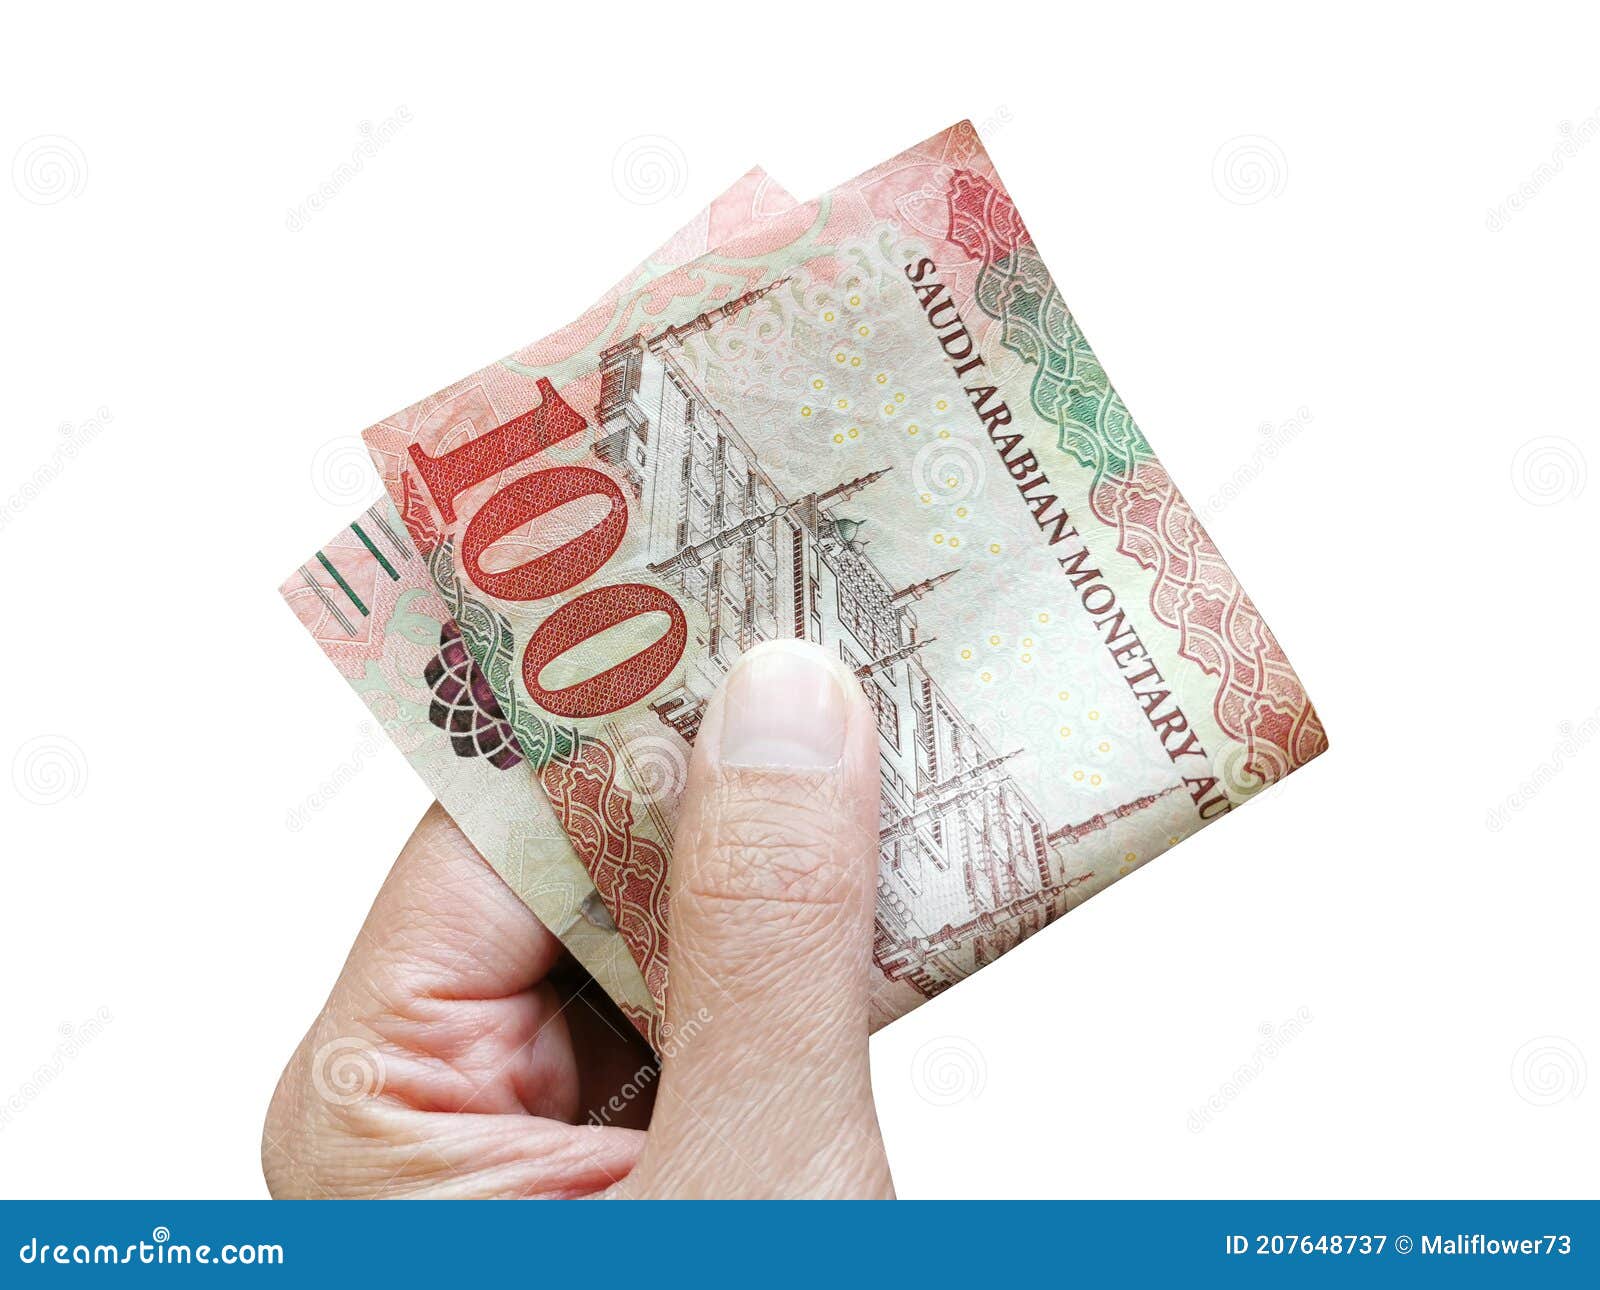 100 riyal saudi banknote in hand  on white background.